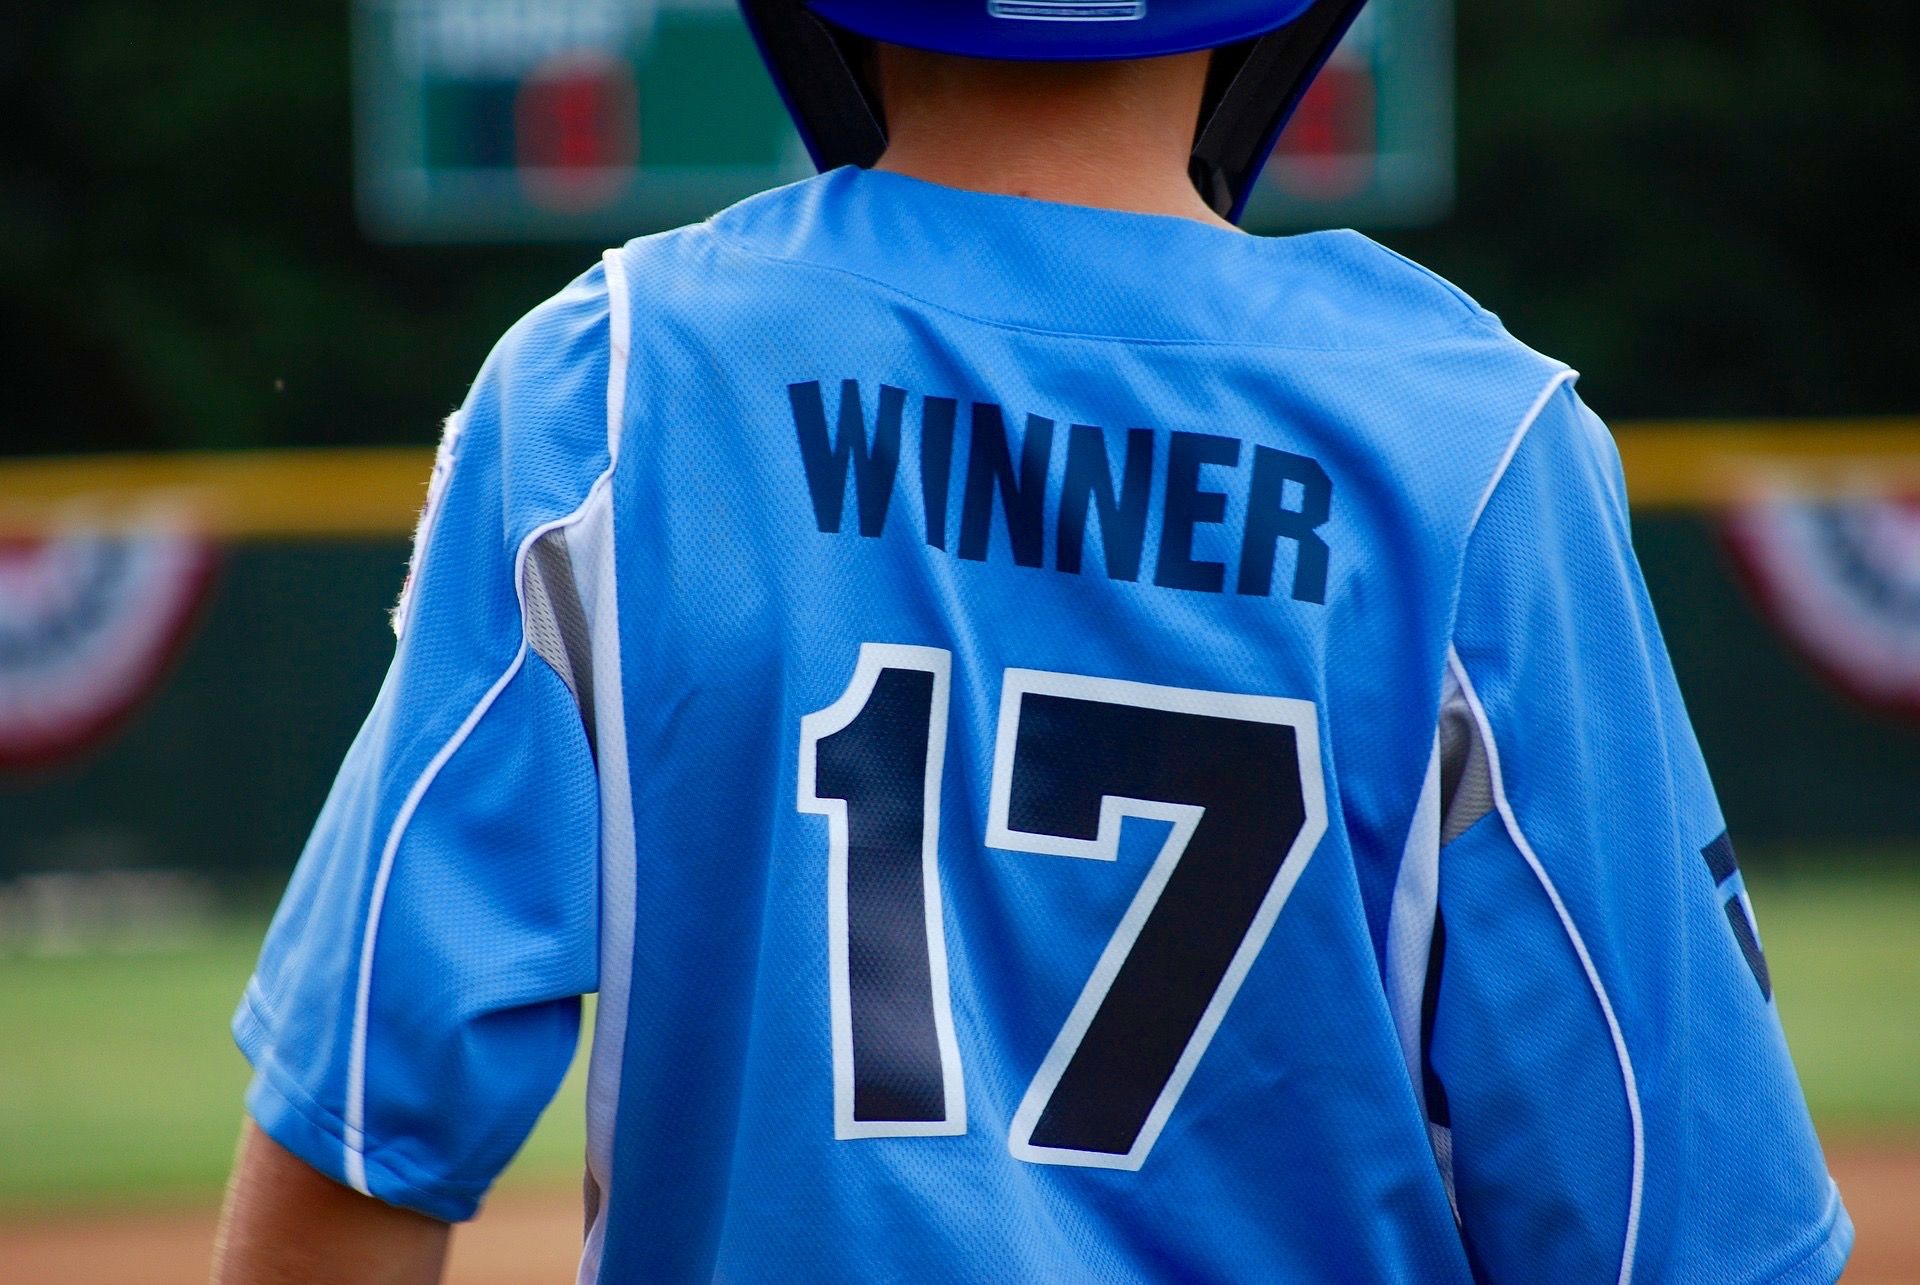 child-baseball-jersey-winner-17-freedomain.jpg